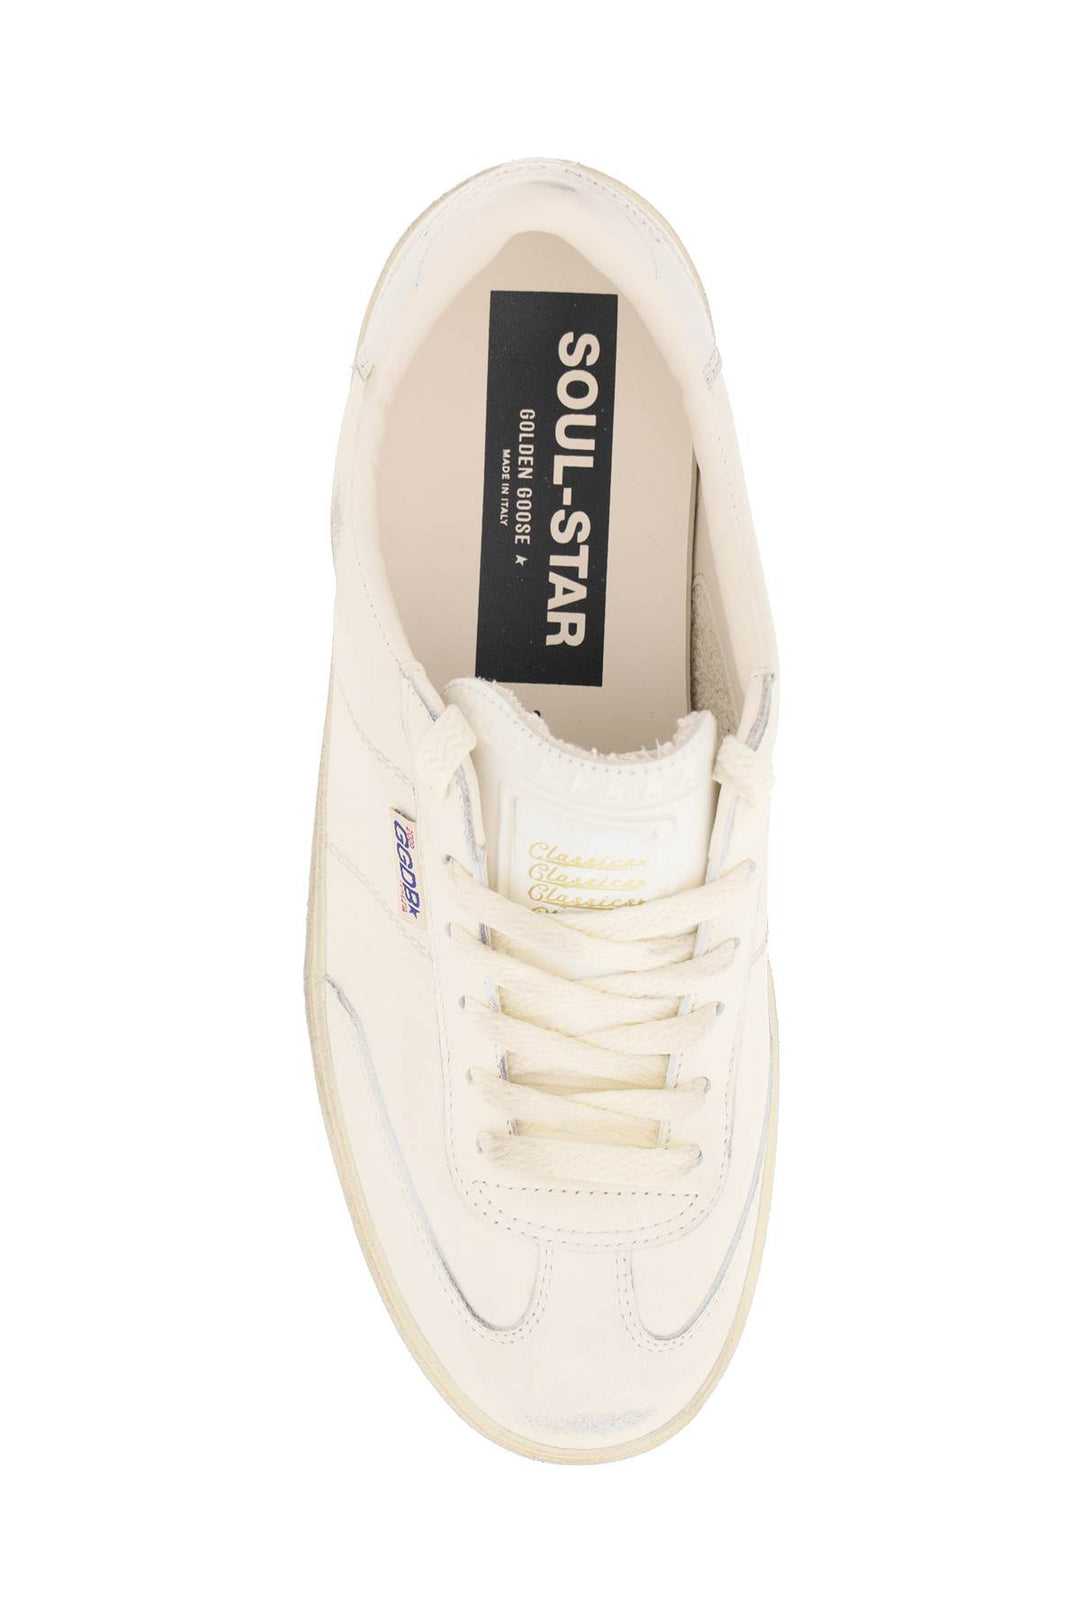 Golden Goose Soul Star Sneakers   Bianco